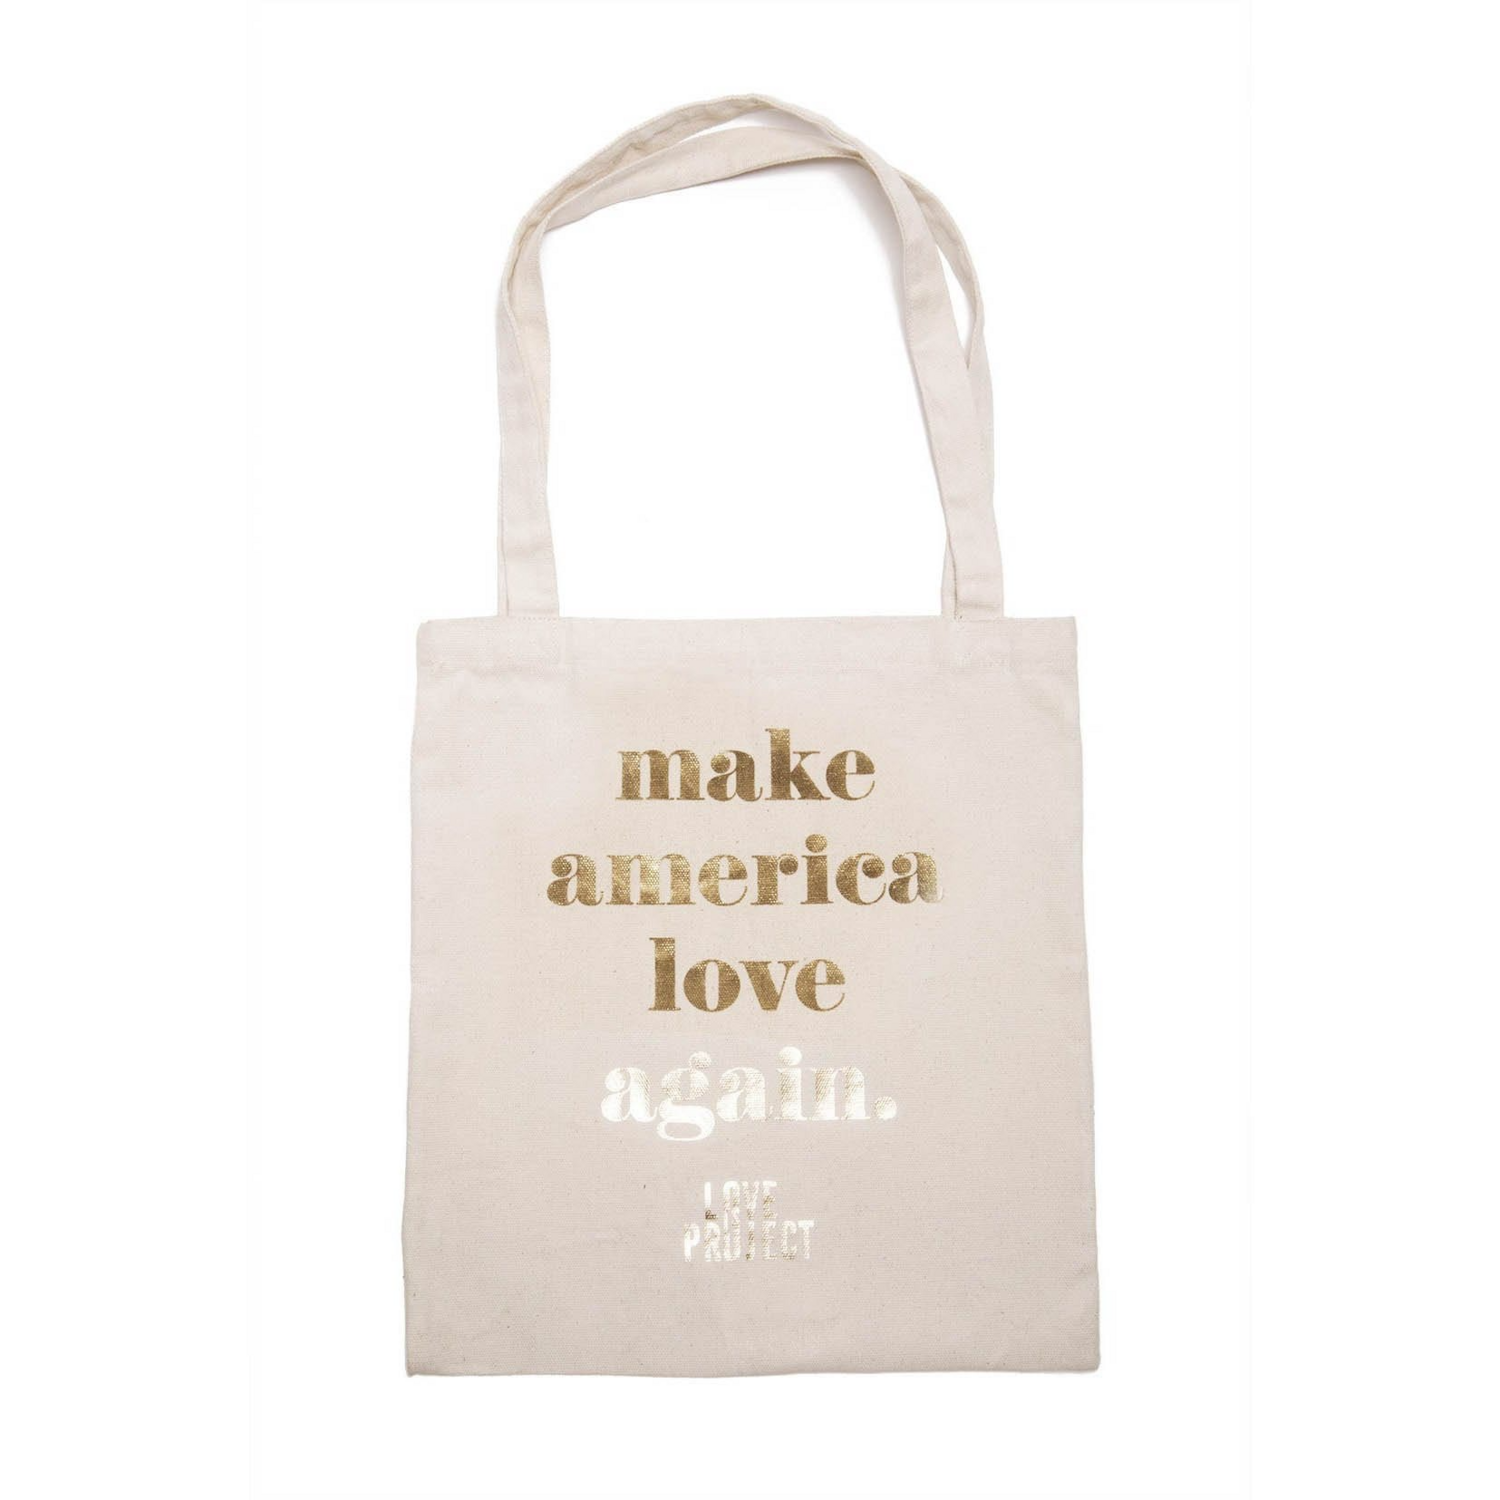 Make America love again tote bag